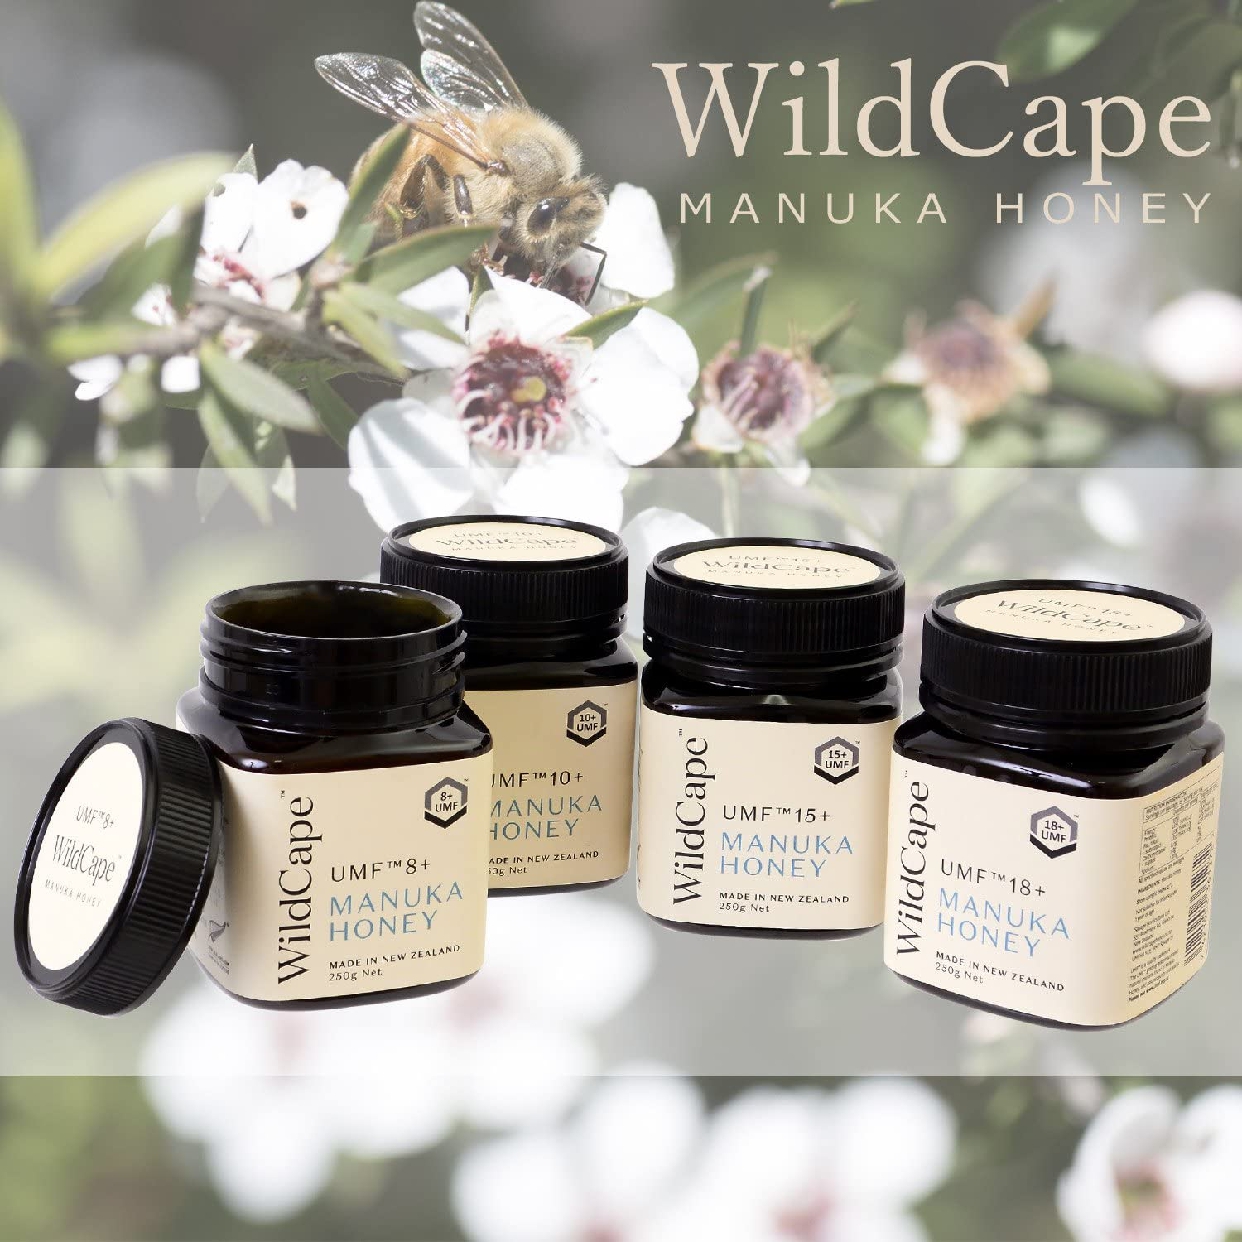 Wild Cape(ワイルドケープ) UMF 8+ Manuka Honeyの商品画像4 